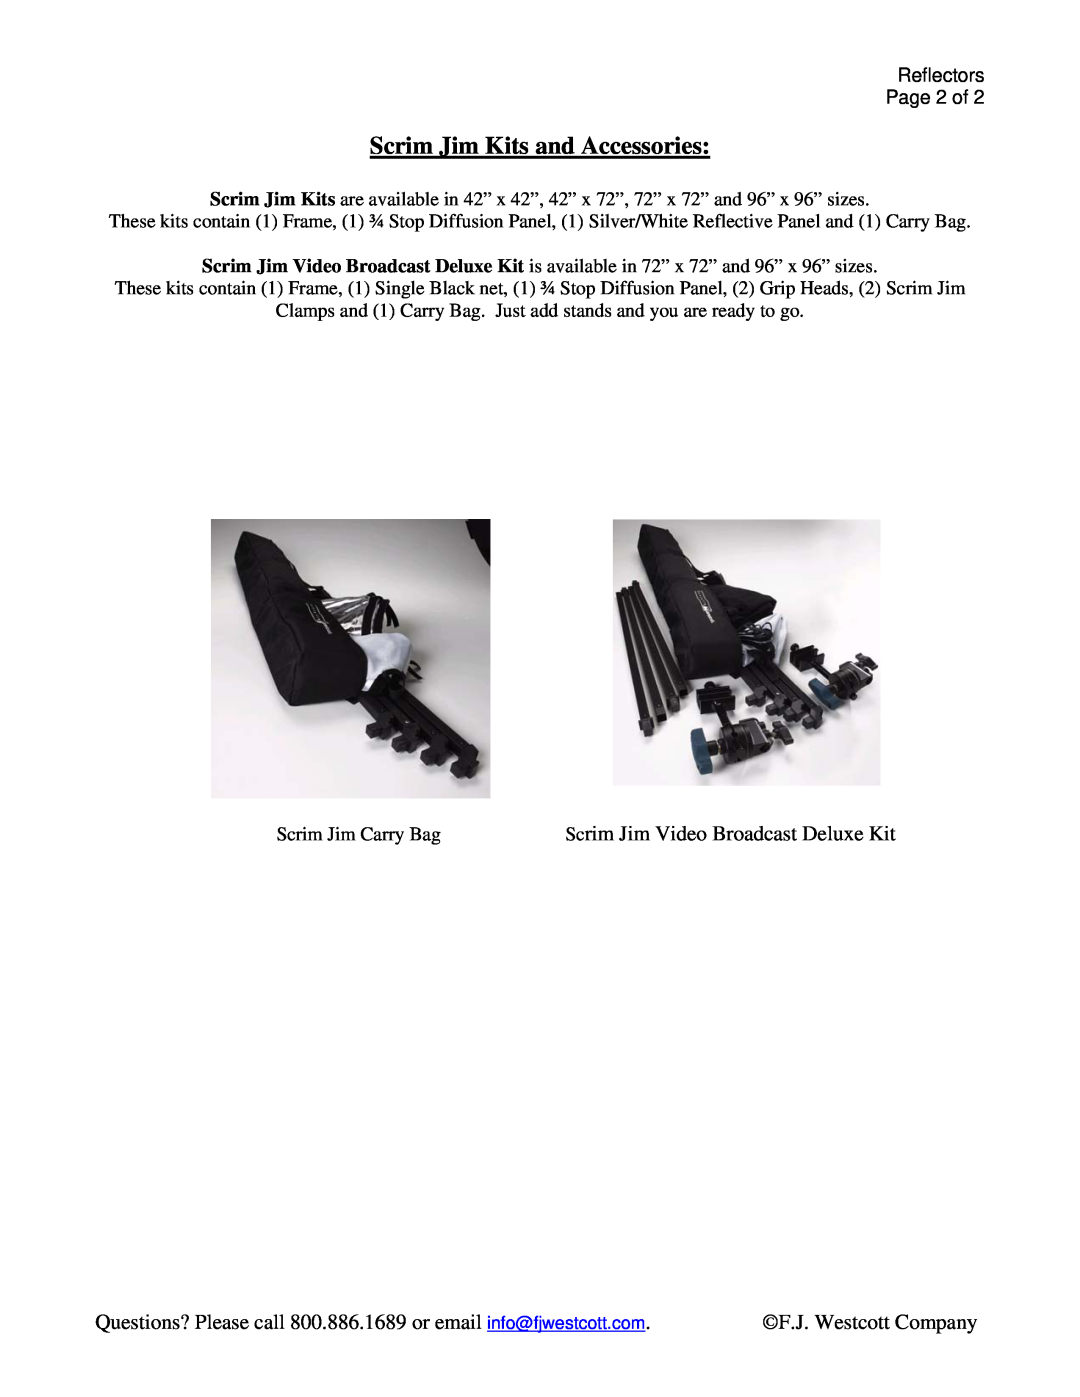 Westcott 1869 manual Scrim Jim Kits and Accessories, Reflectors 